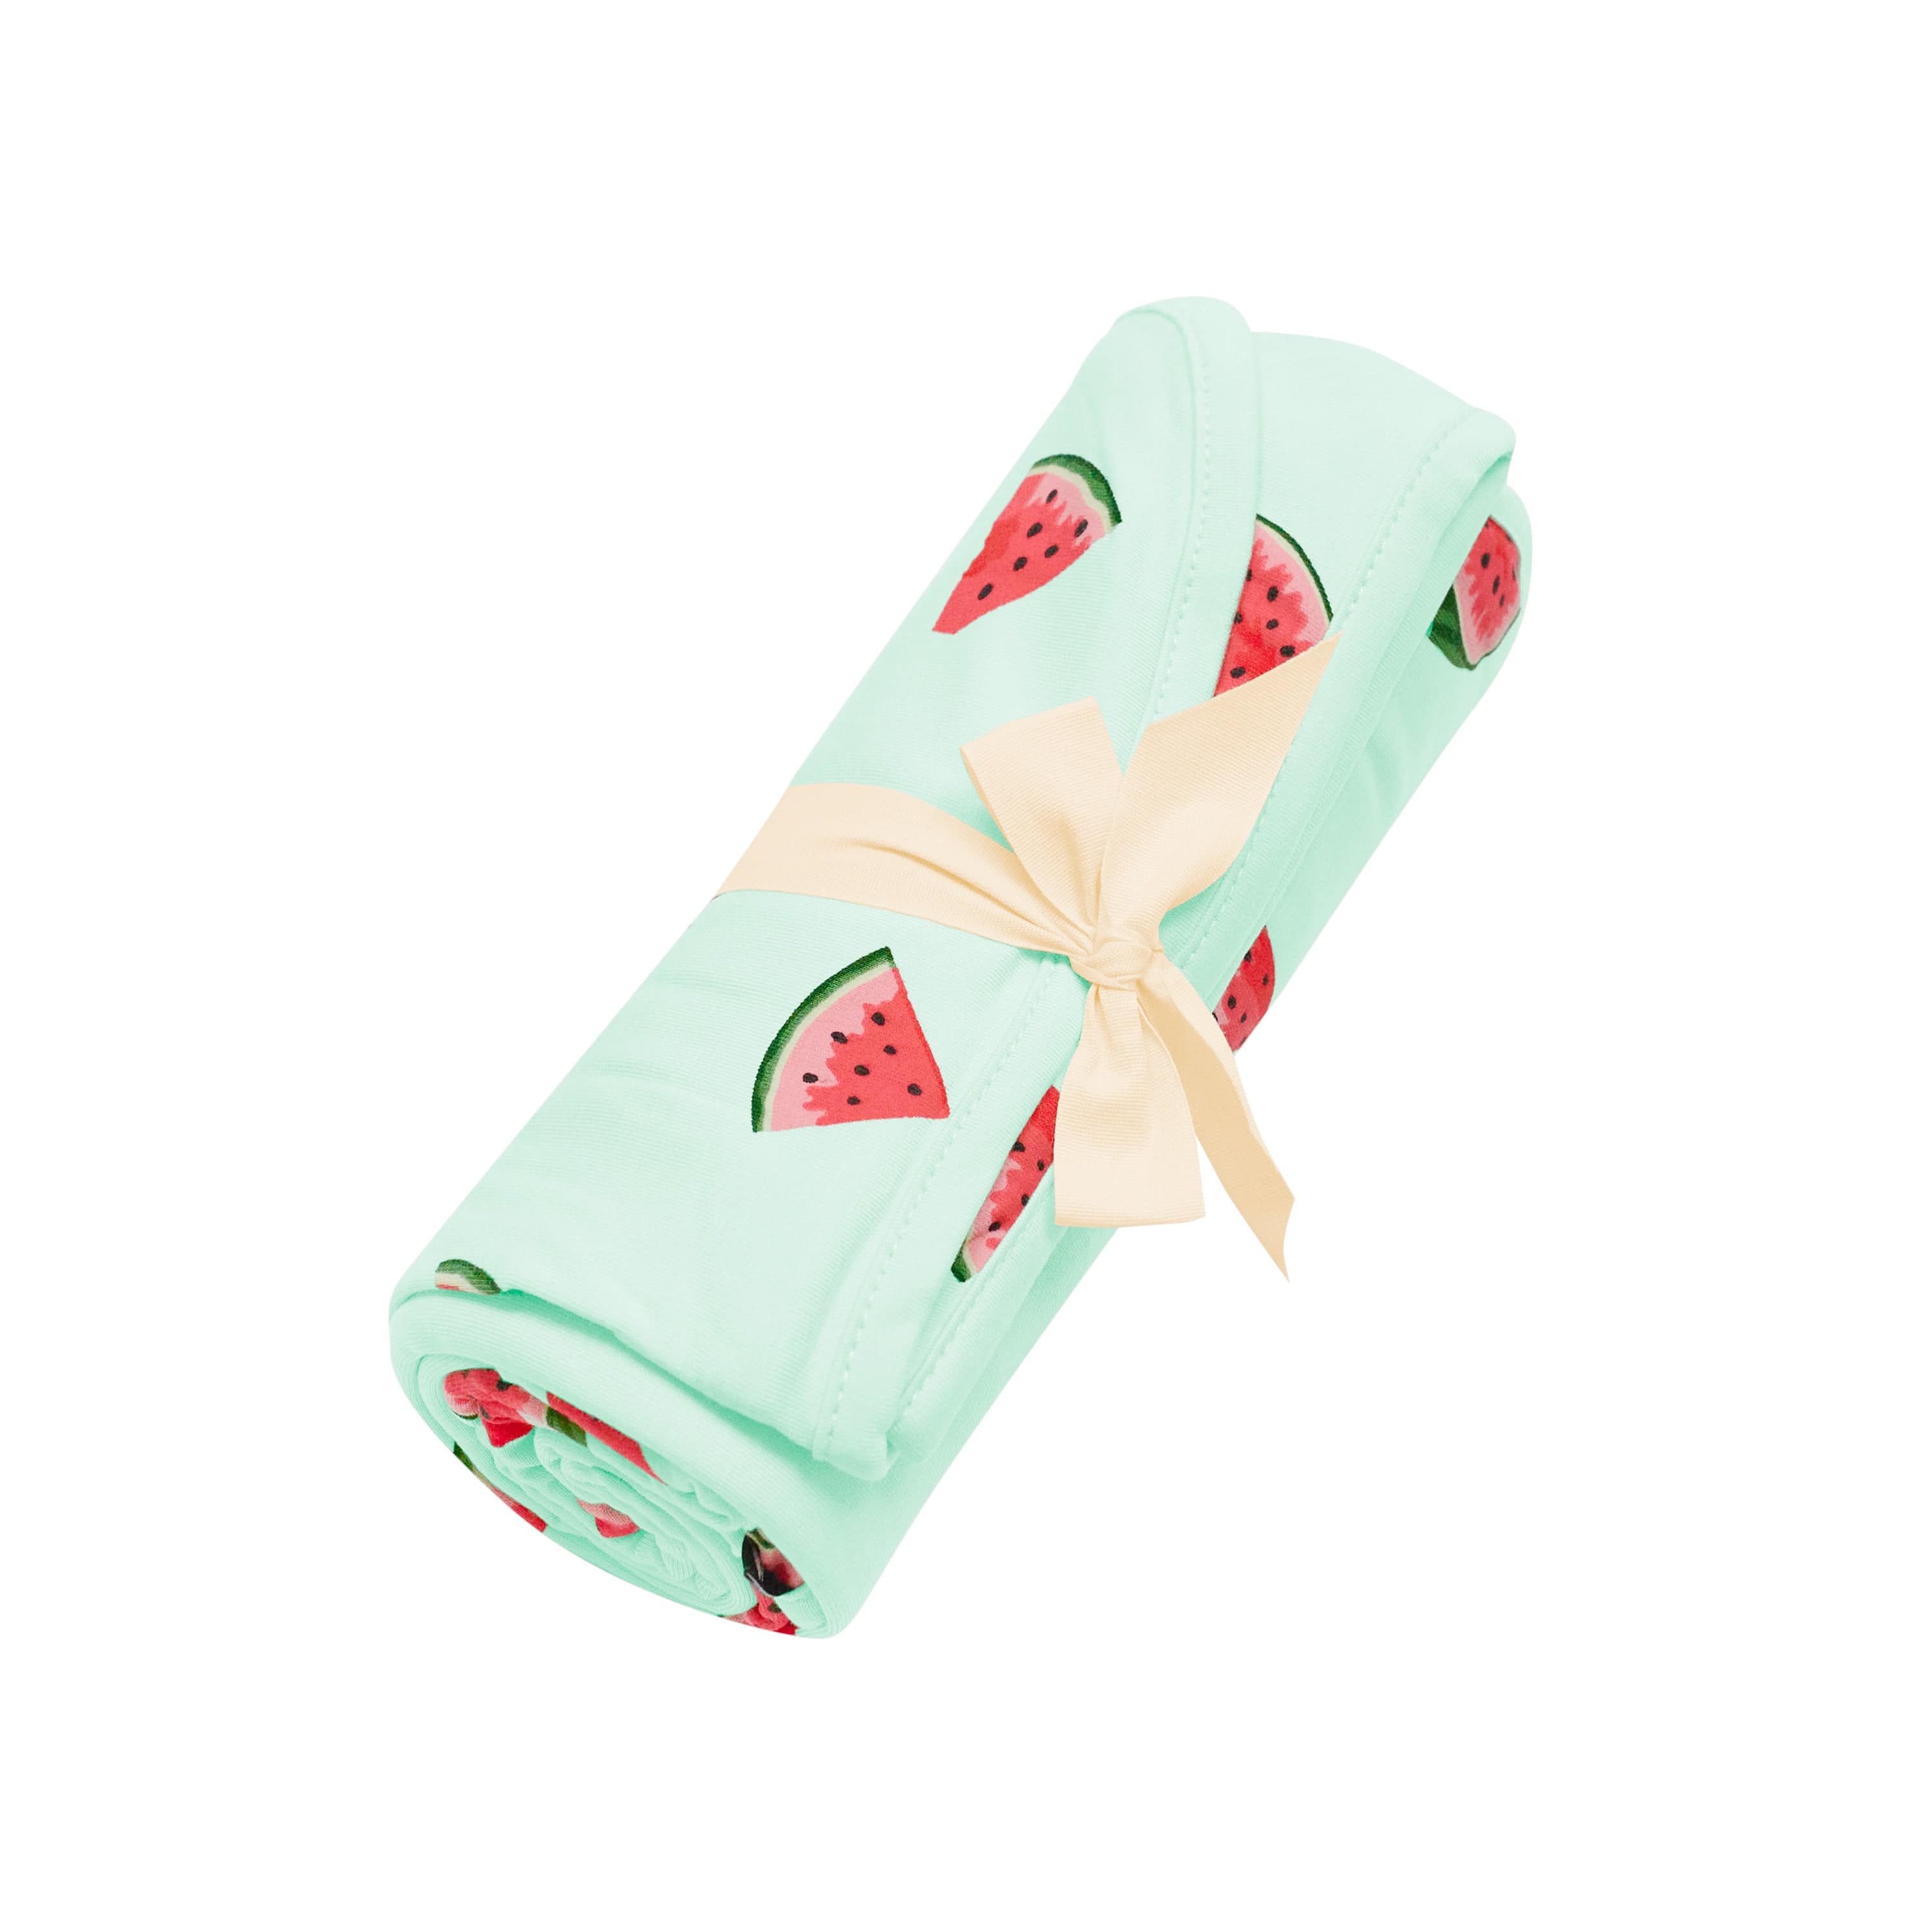 Kyte Baby Swaddling Blanket Watermelon / Infant Swaddle Blanket in Watermelon